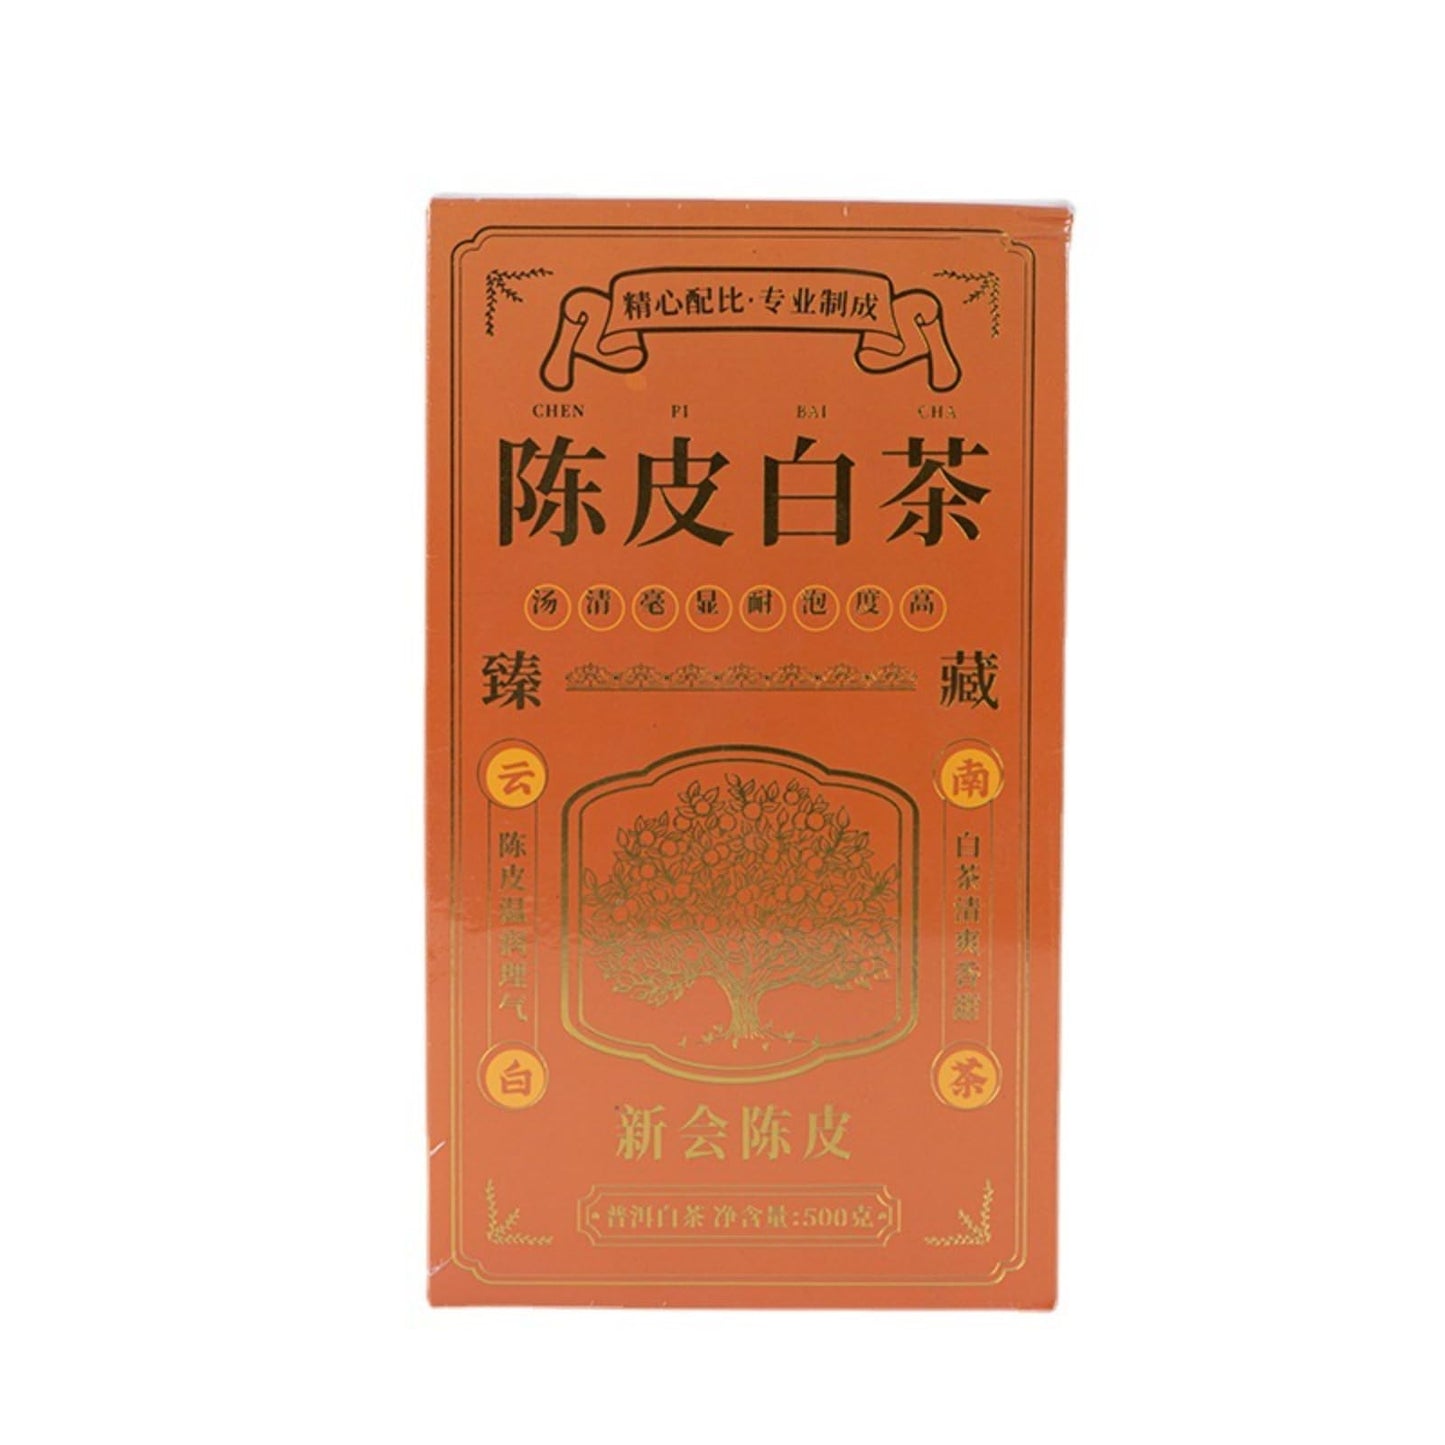 Premium Chenpi White Tea Xinhui Chenpi Tea 500g Yunnan Puerh Tea Brick Natural Chinese Tea 陈皮白茶新会陈皮茶叶500g云南普洱茶茶砖